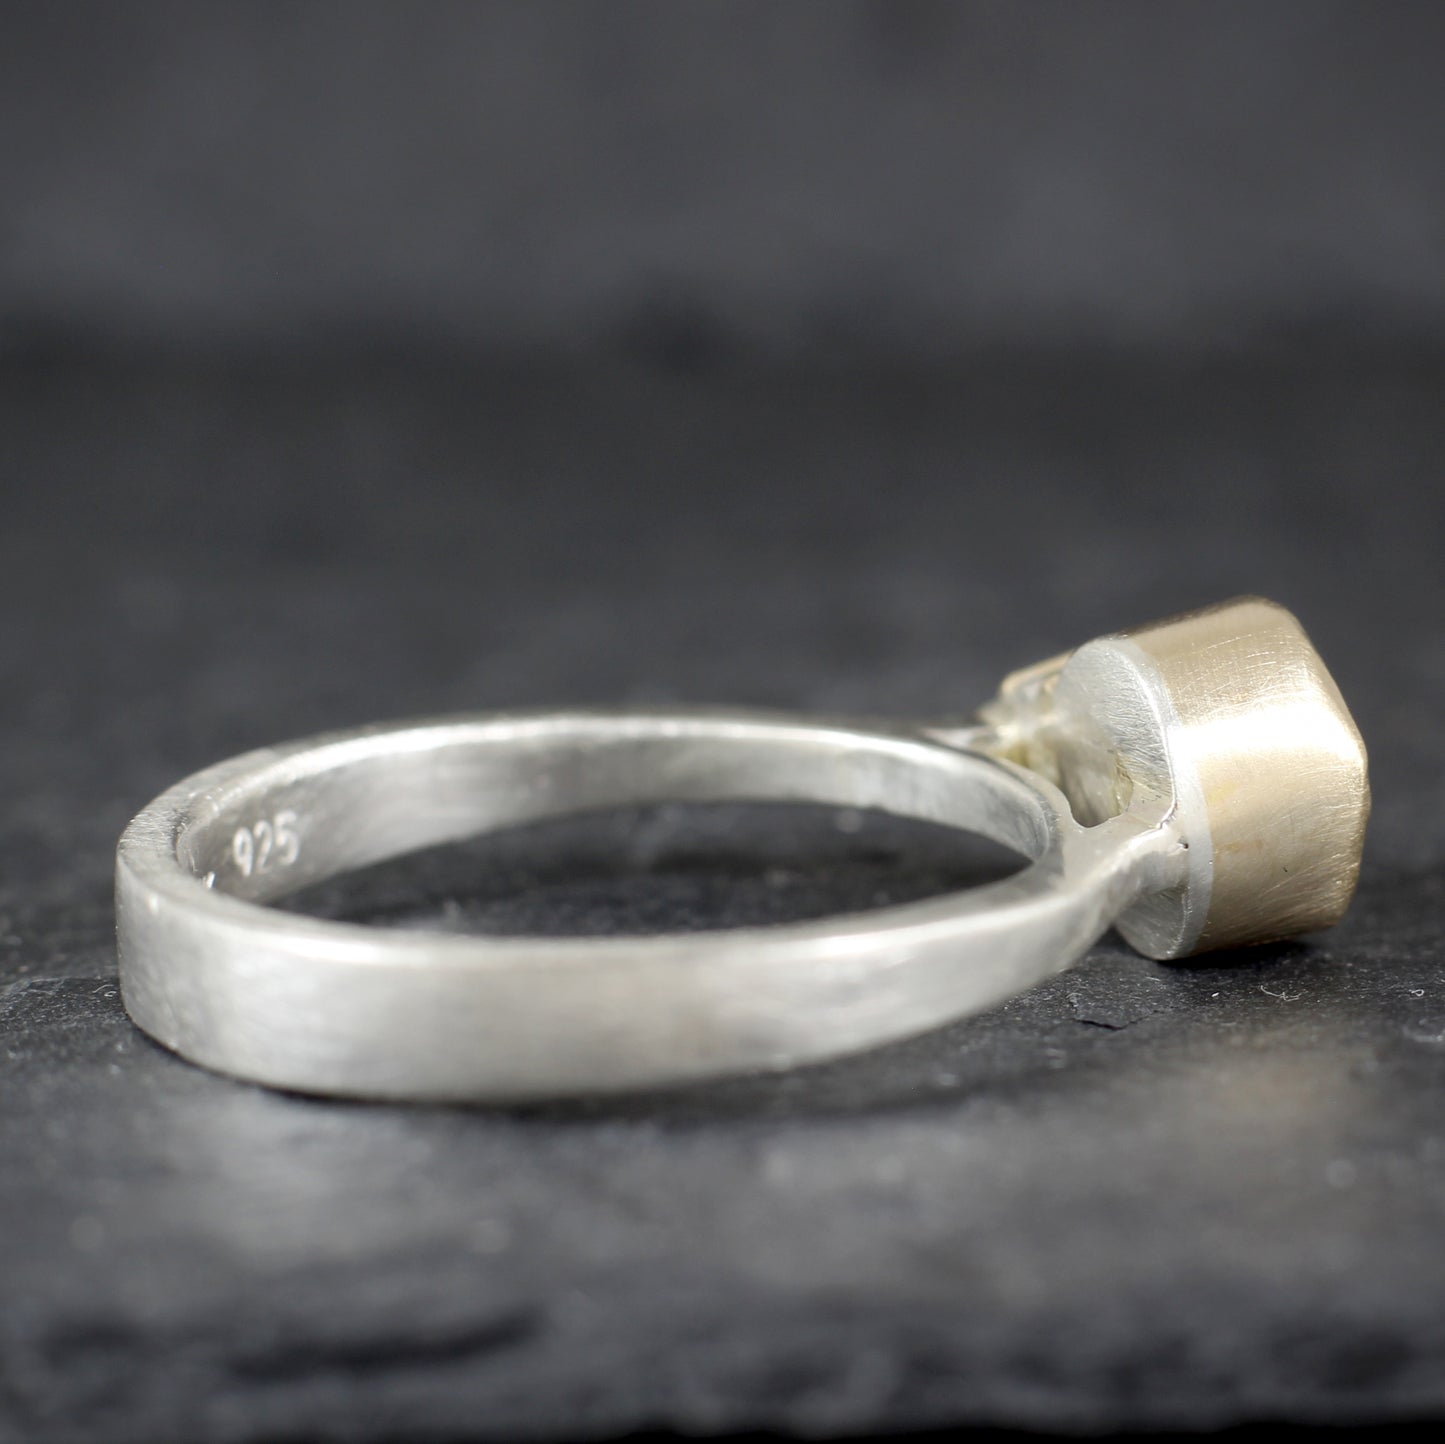 Mågi ring - Raw Montana Sapphire and Australian Sapphire Ring